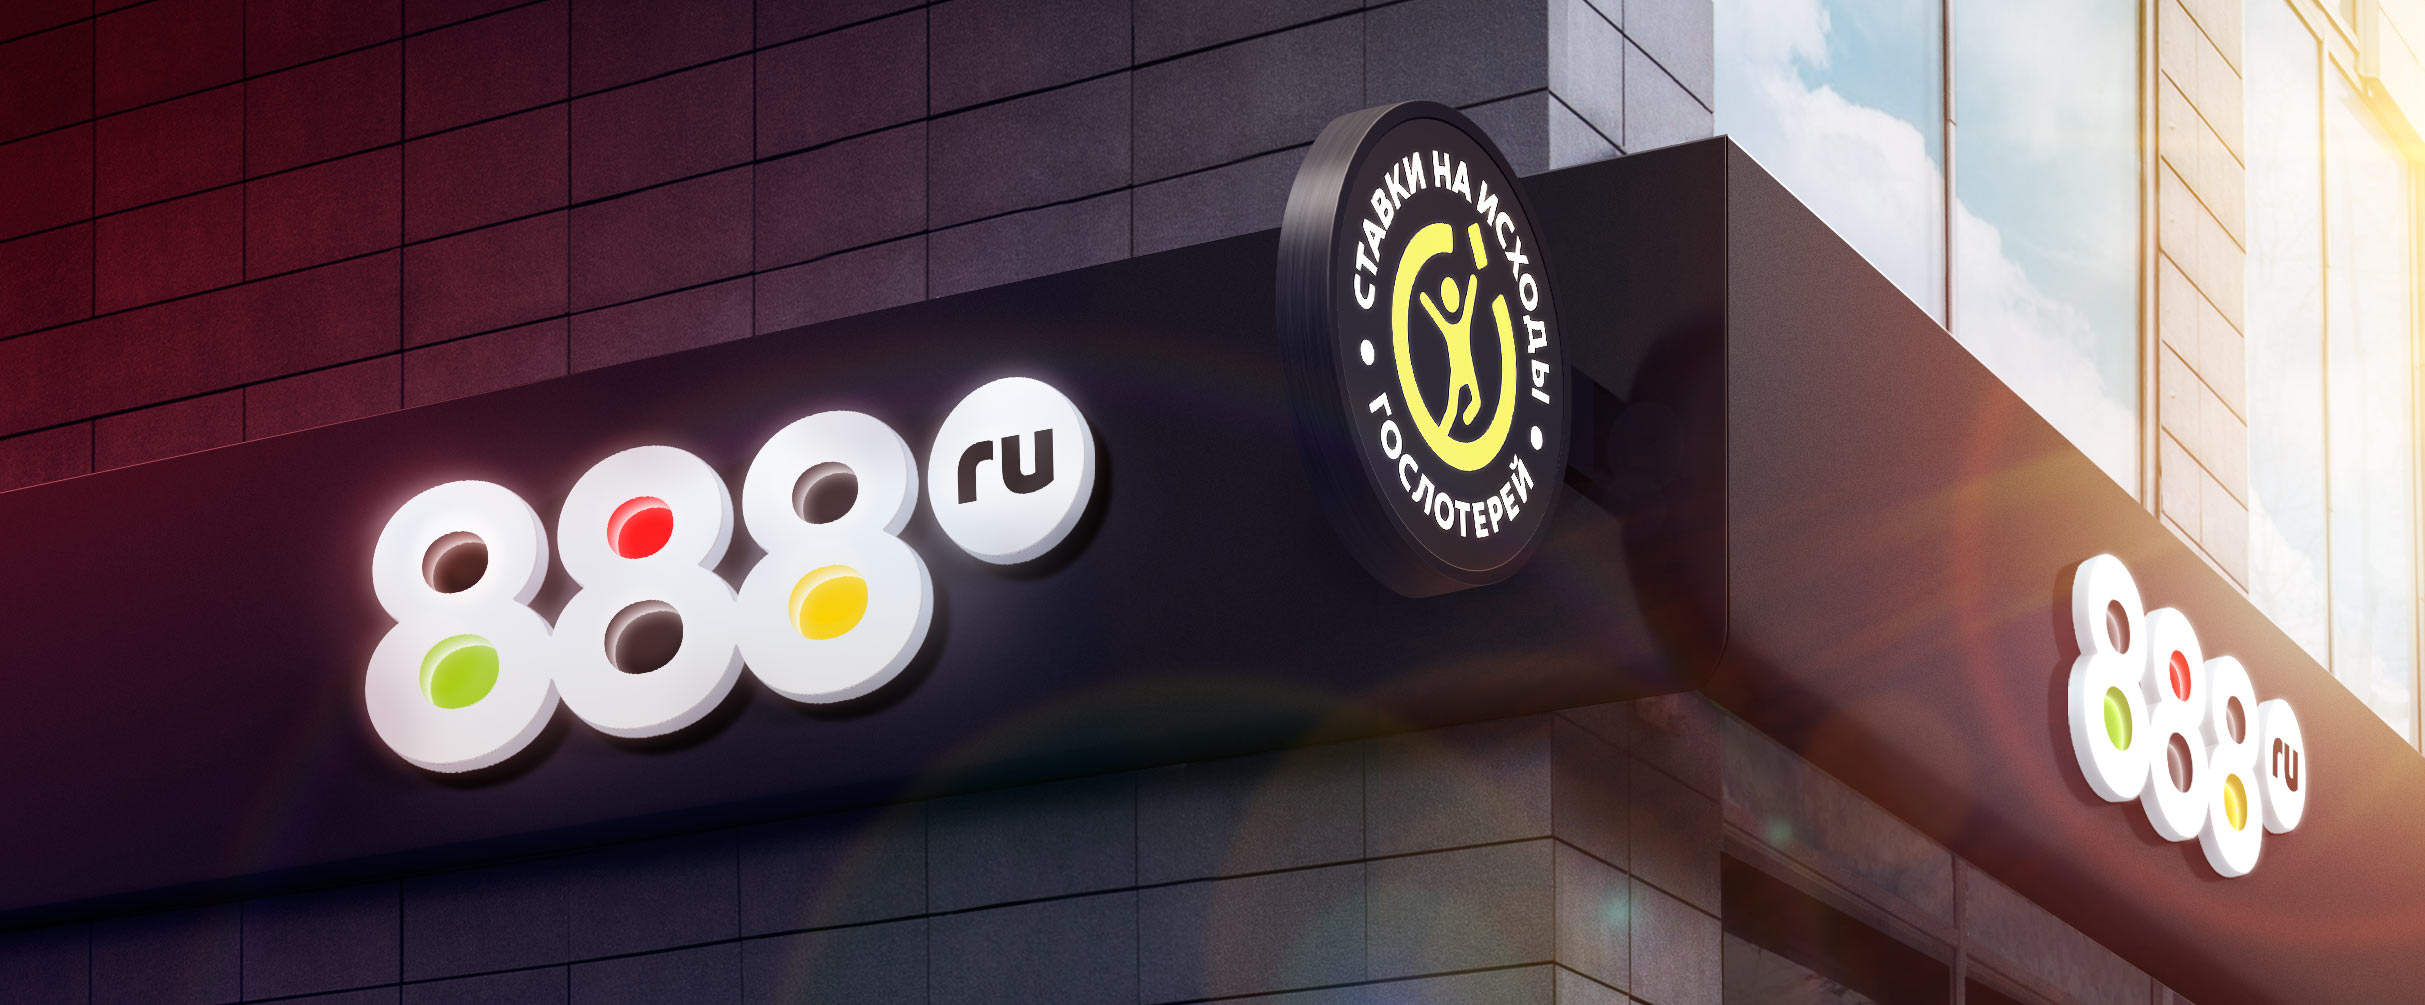 888 logo signboard